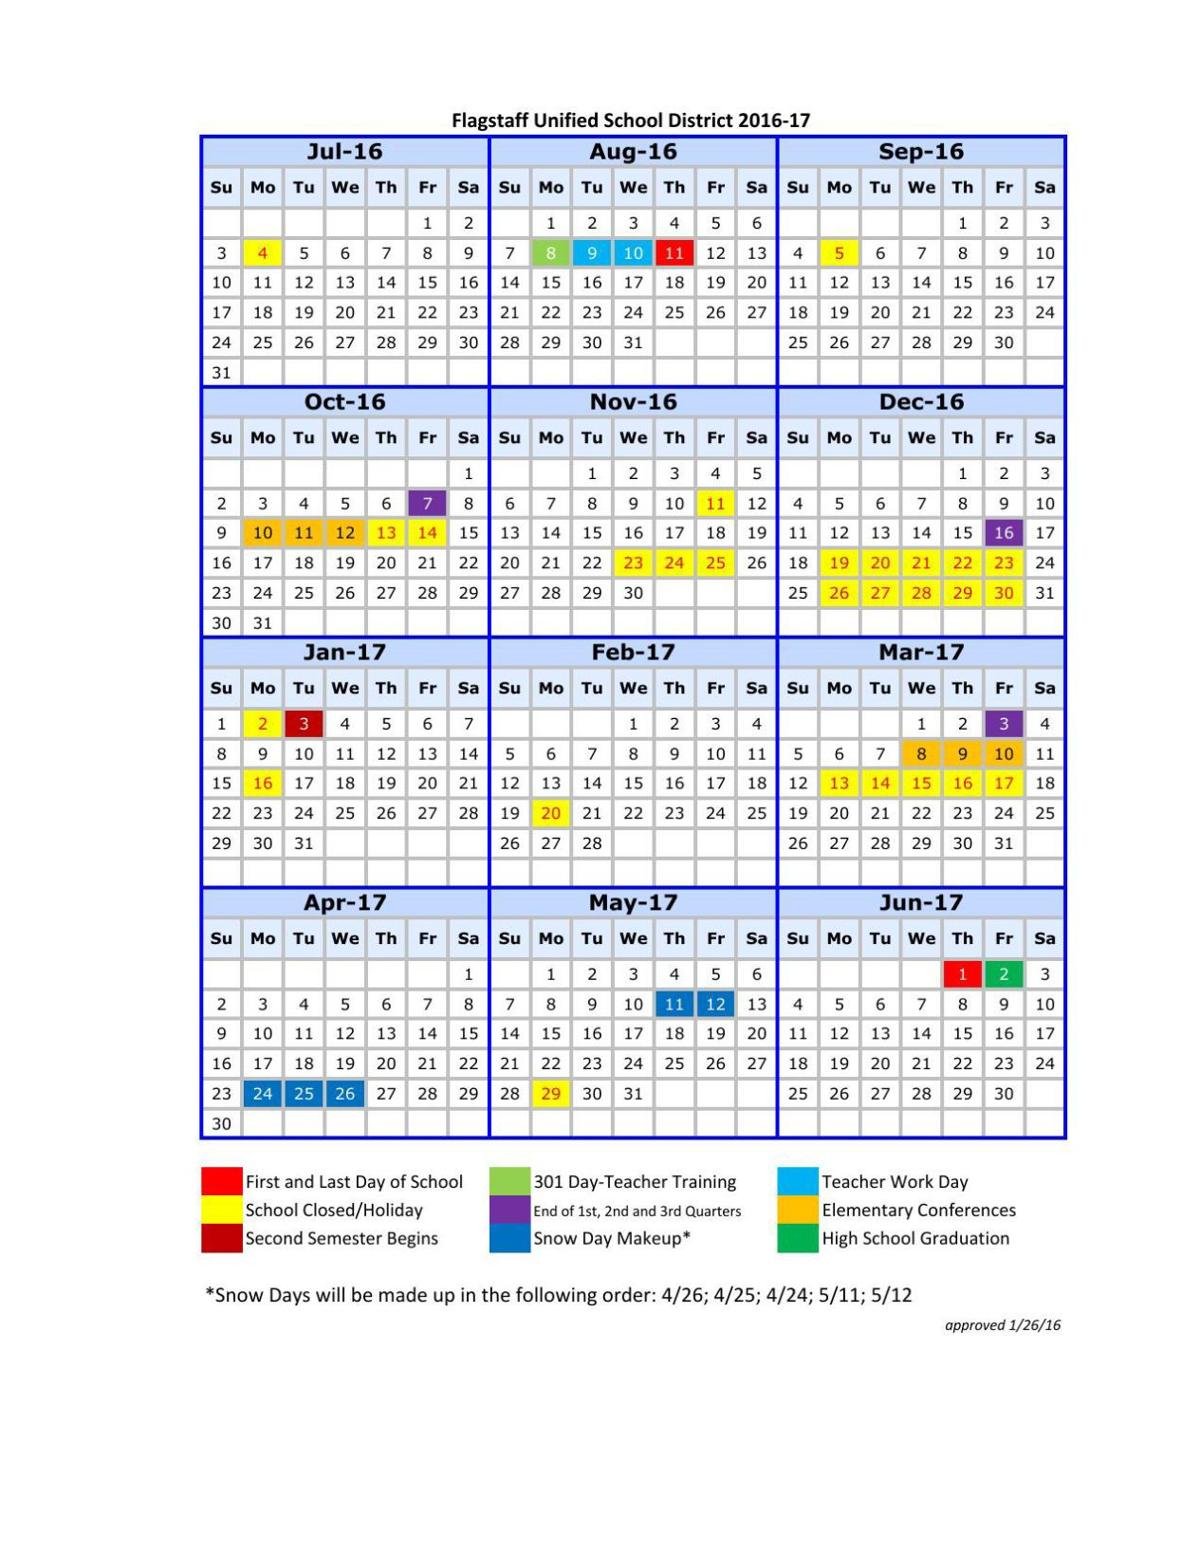 ousd calendar 2016 17 School year calendar ousd earlier started